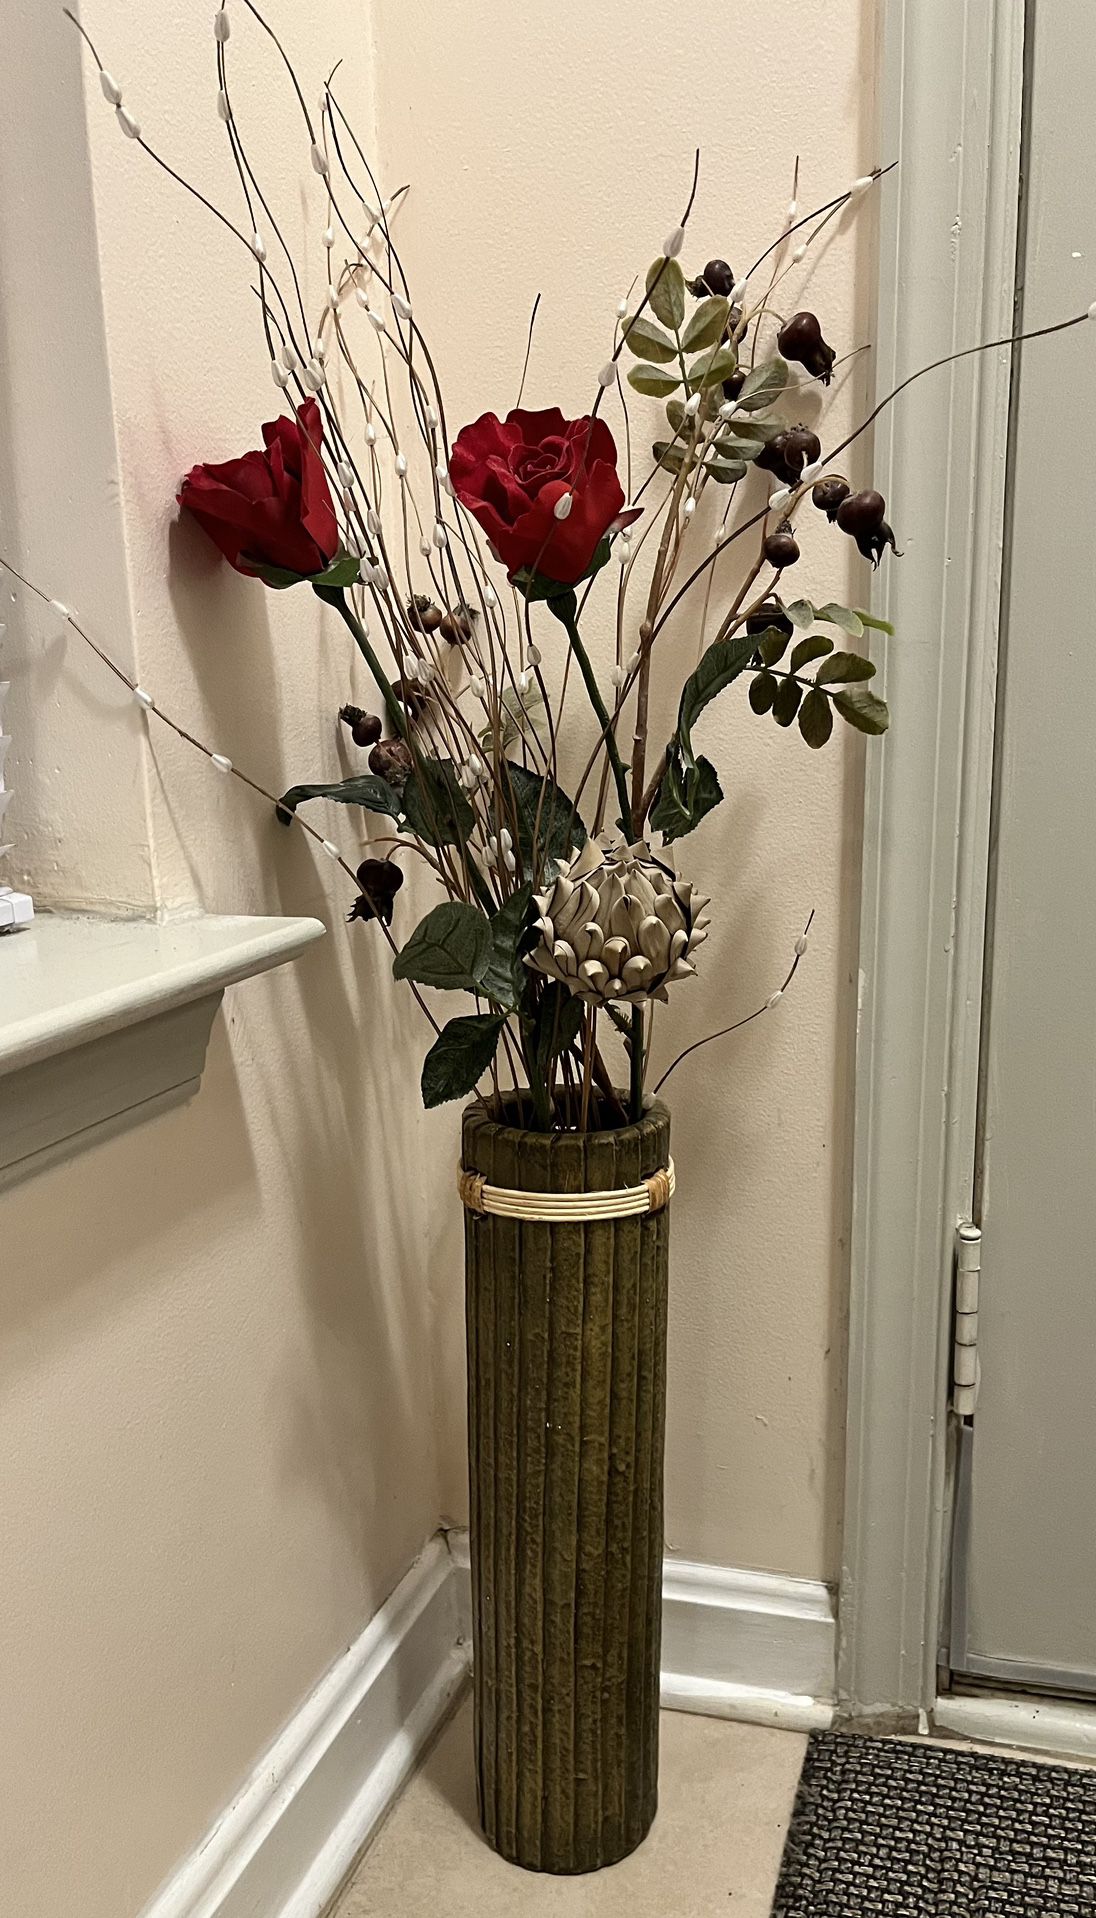 Ceramic Vase With Arranged Flowers 30”